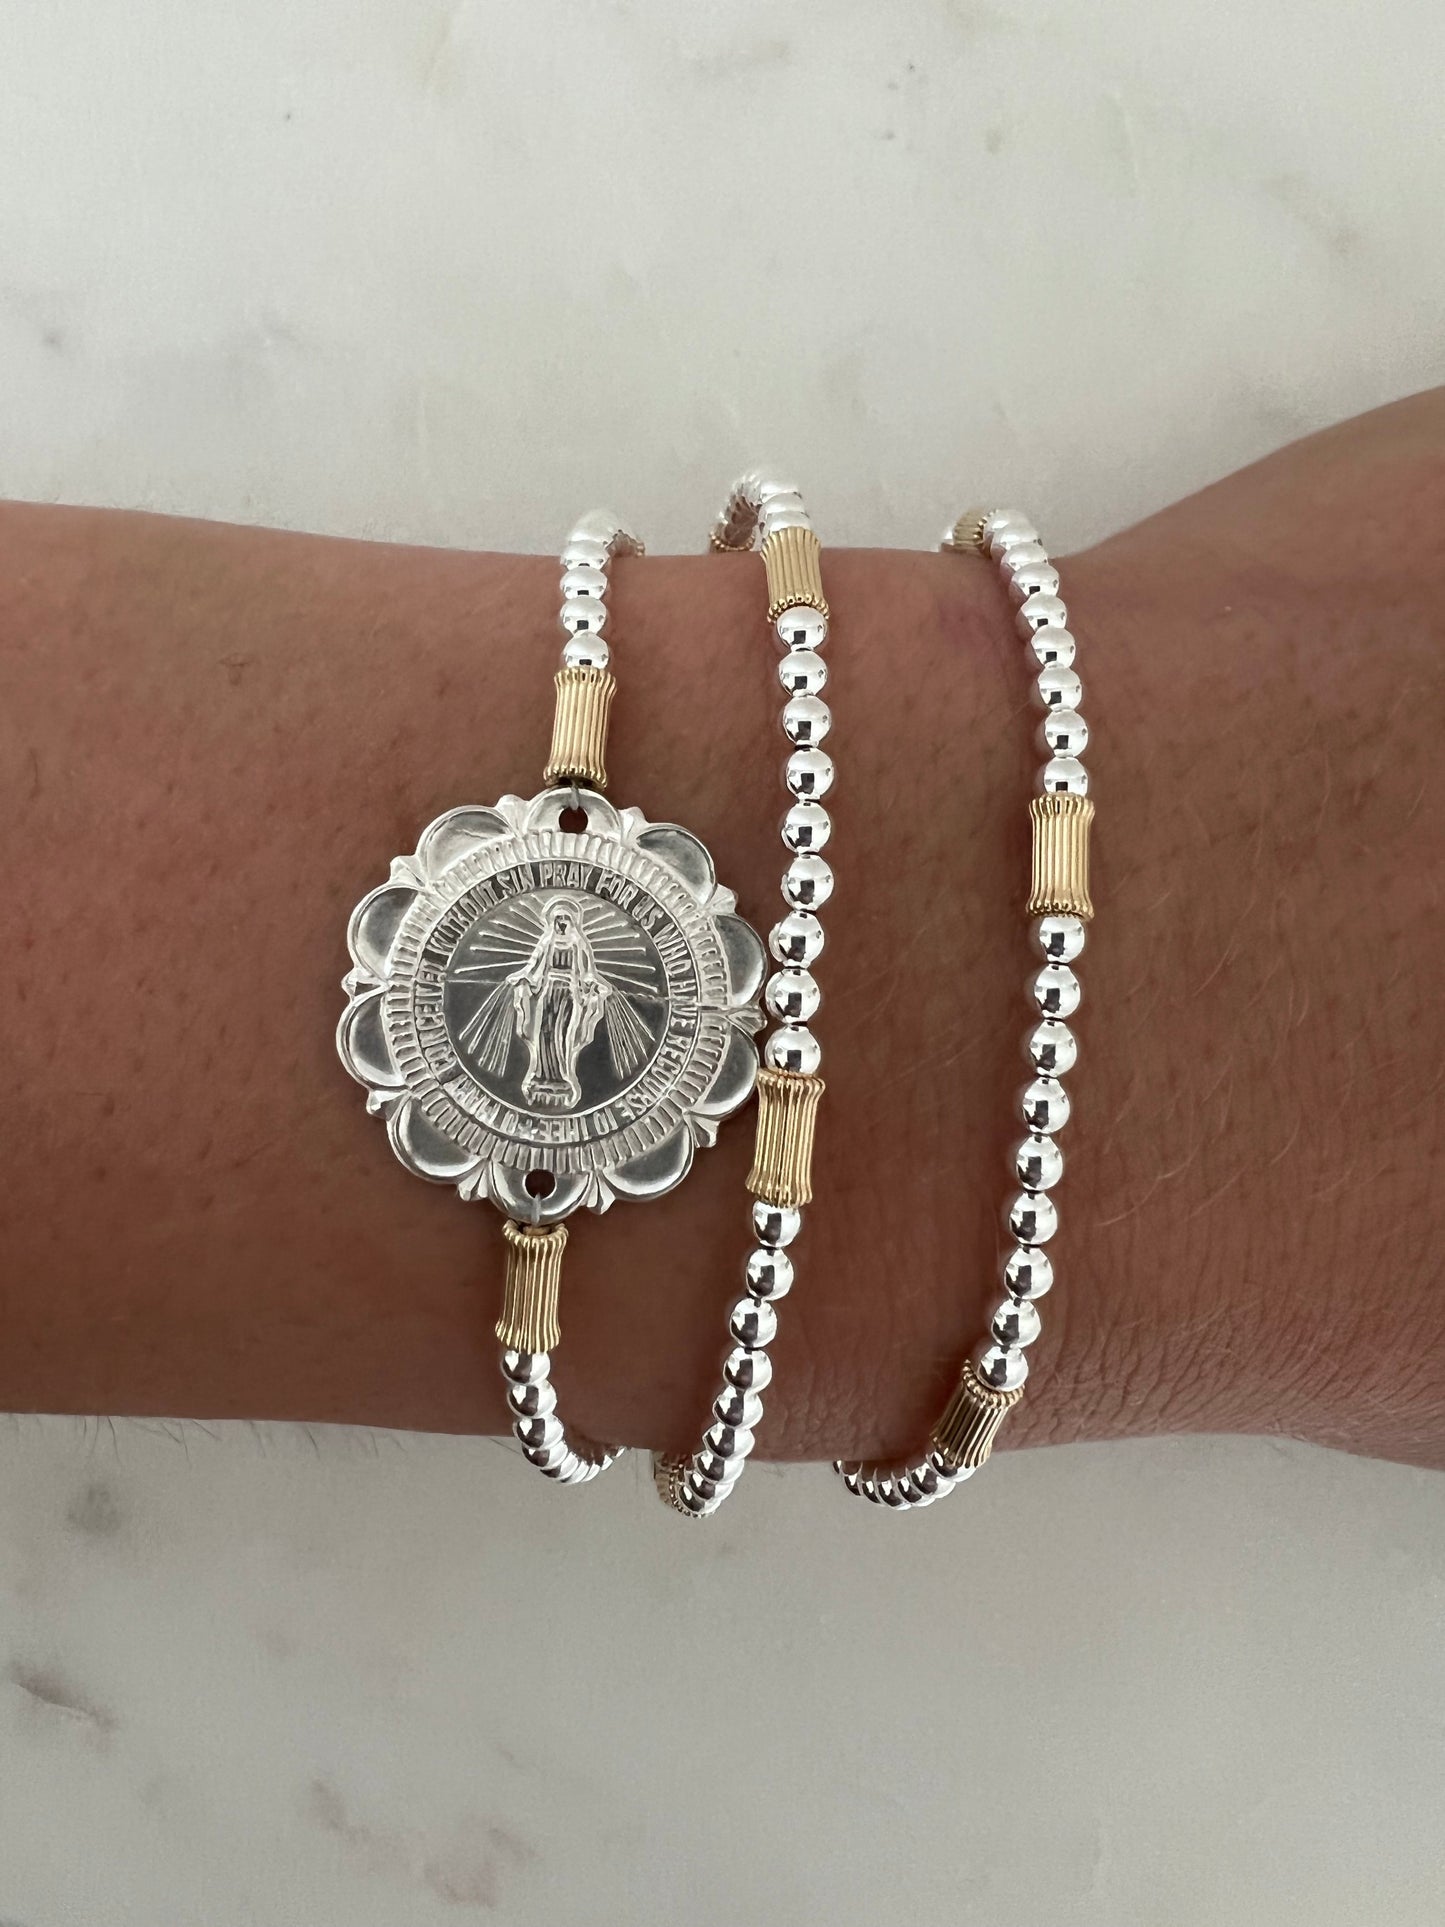 14k Gold Filled Mother Mary Wrap Bracelet + More Options